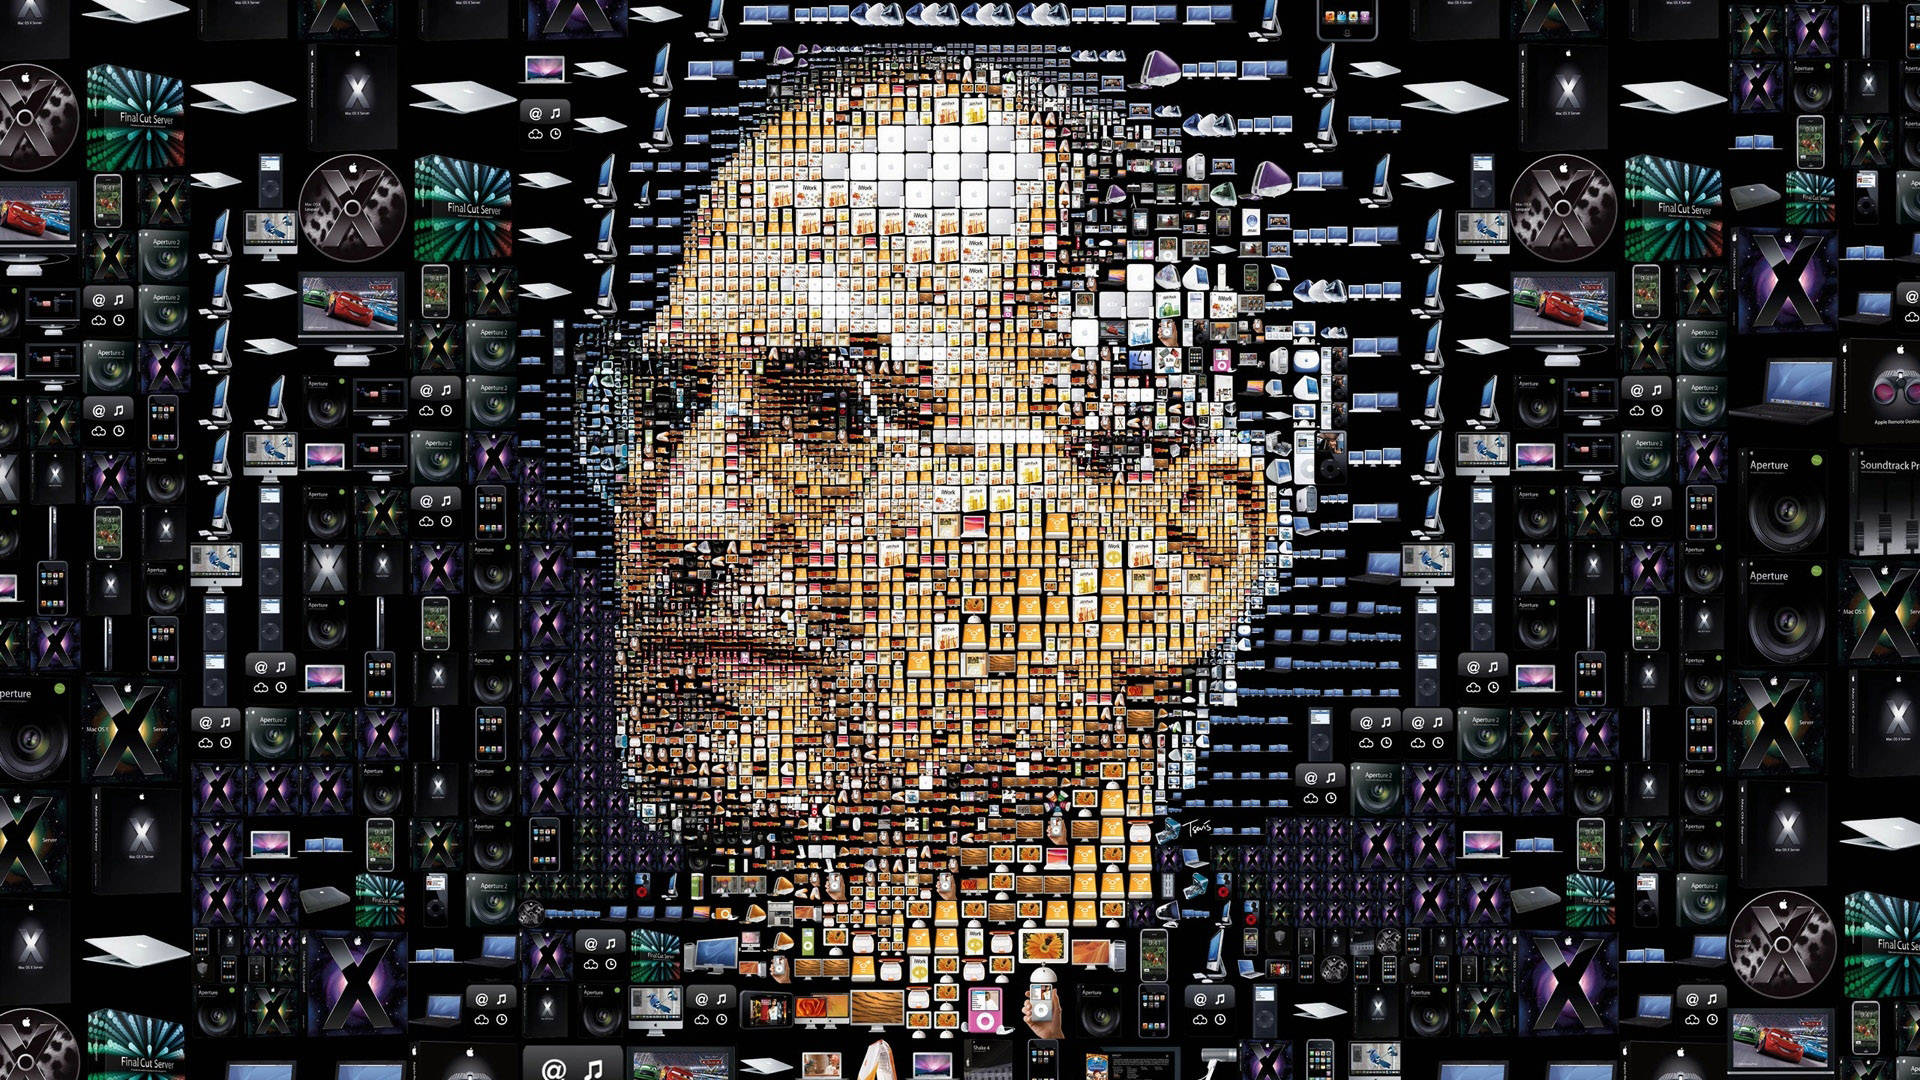 Steve Jobs Mosaic Engineering Picture